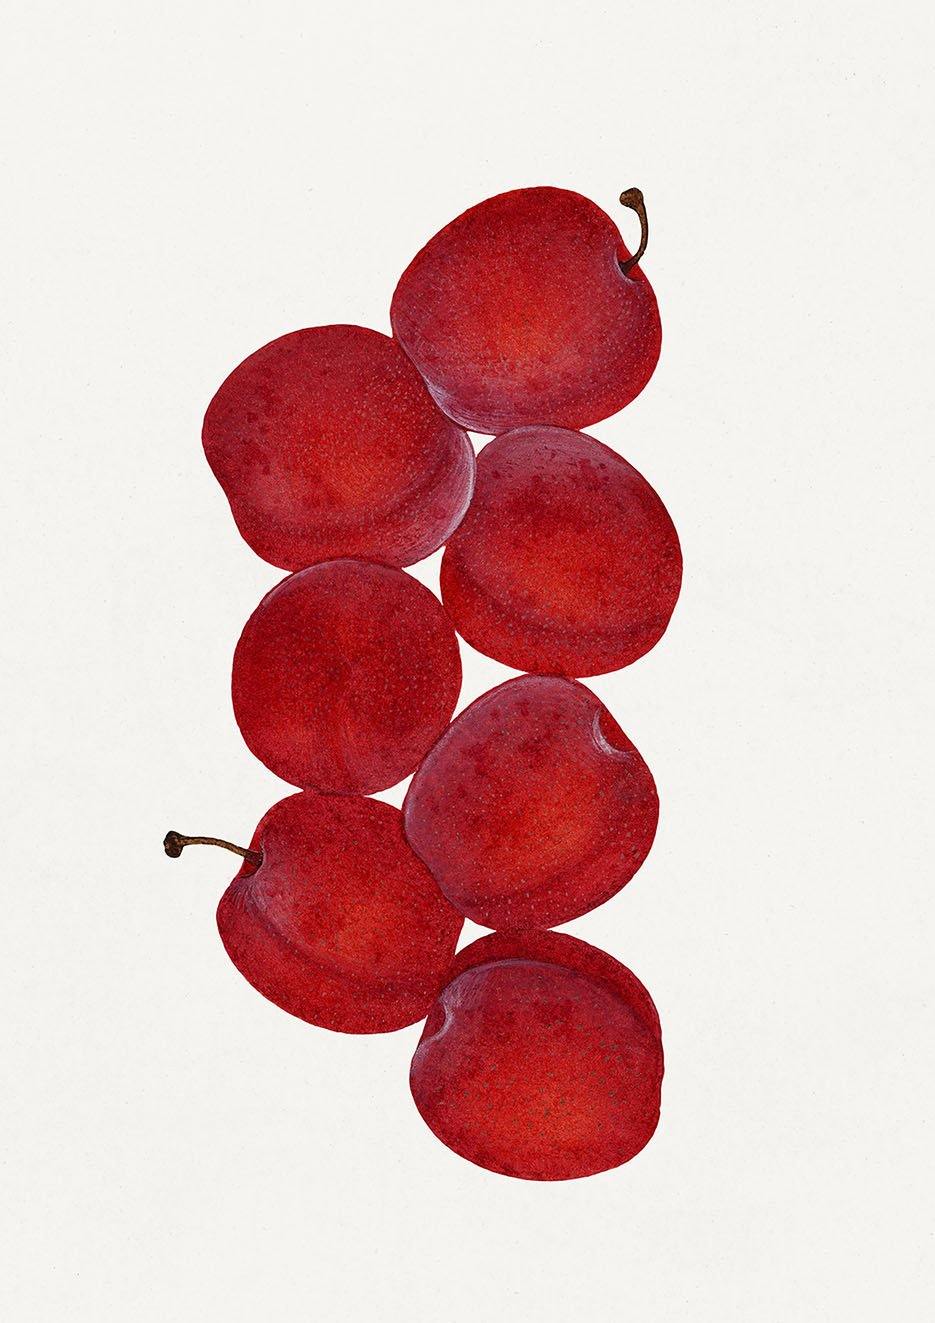 PLUMS PRINT: Vintage Red Fruit Art Illustration - Pimlico Prints